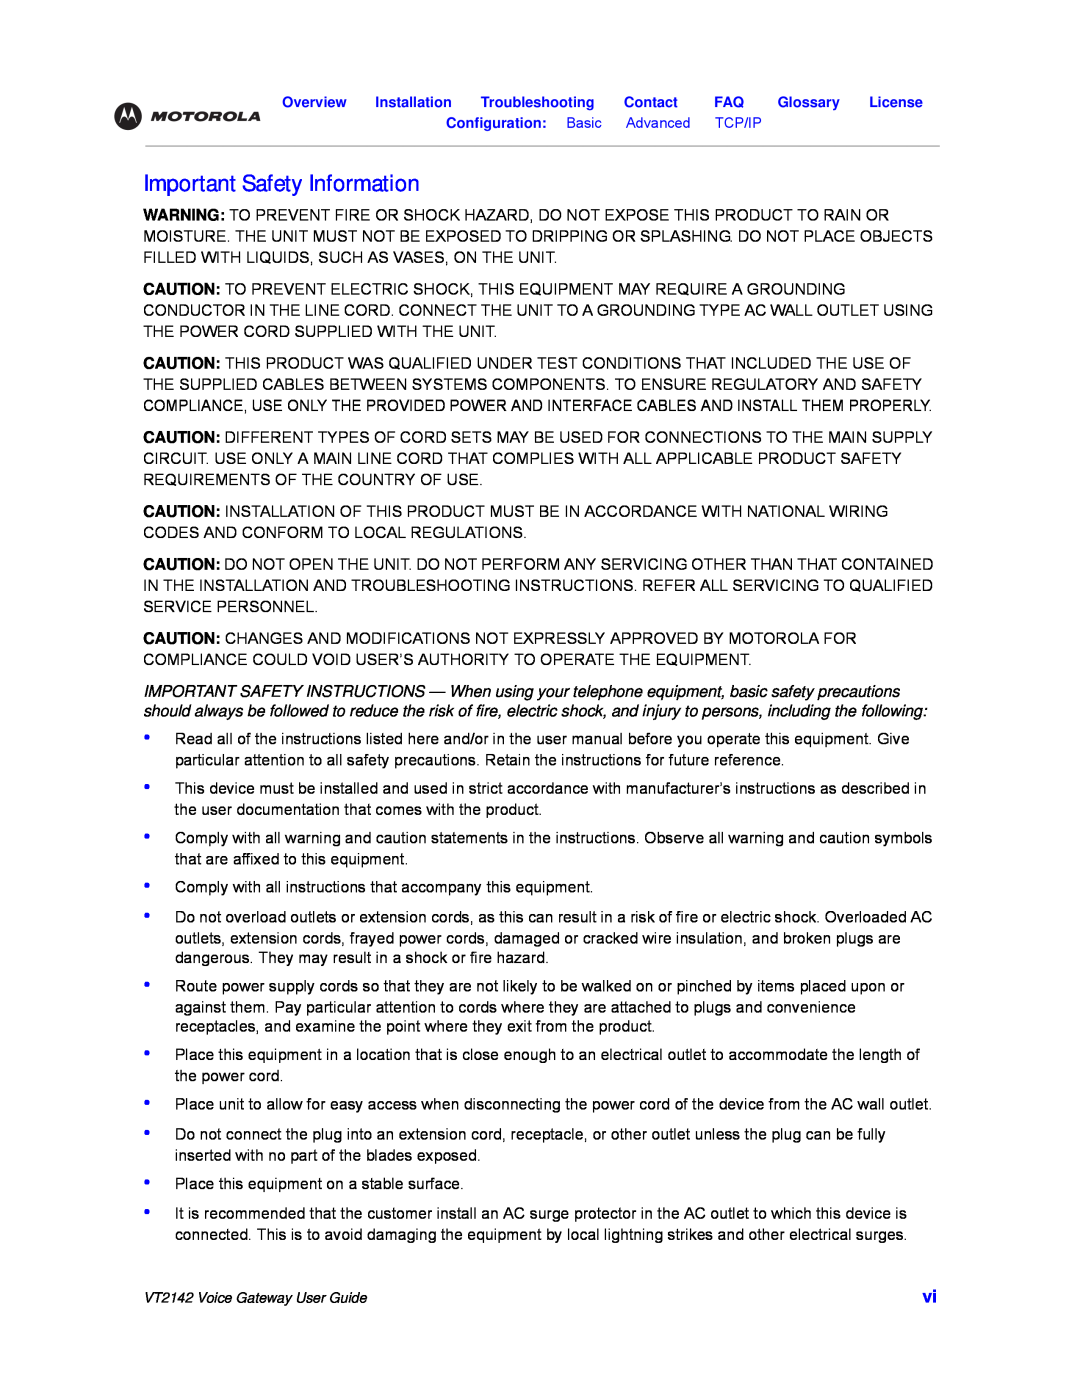 Motorola VT2142 manual Important Safety Information 